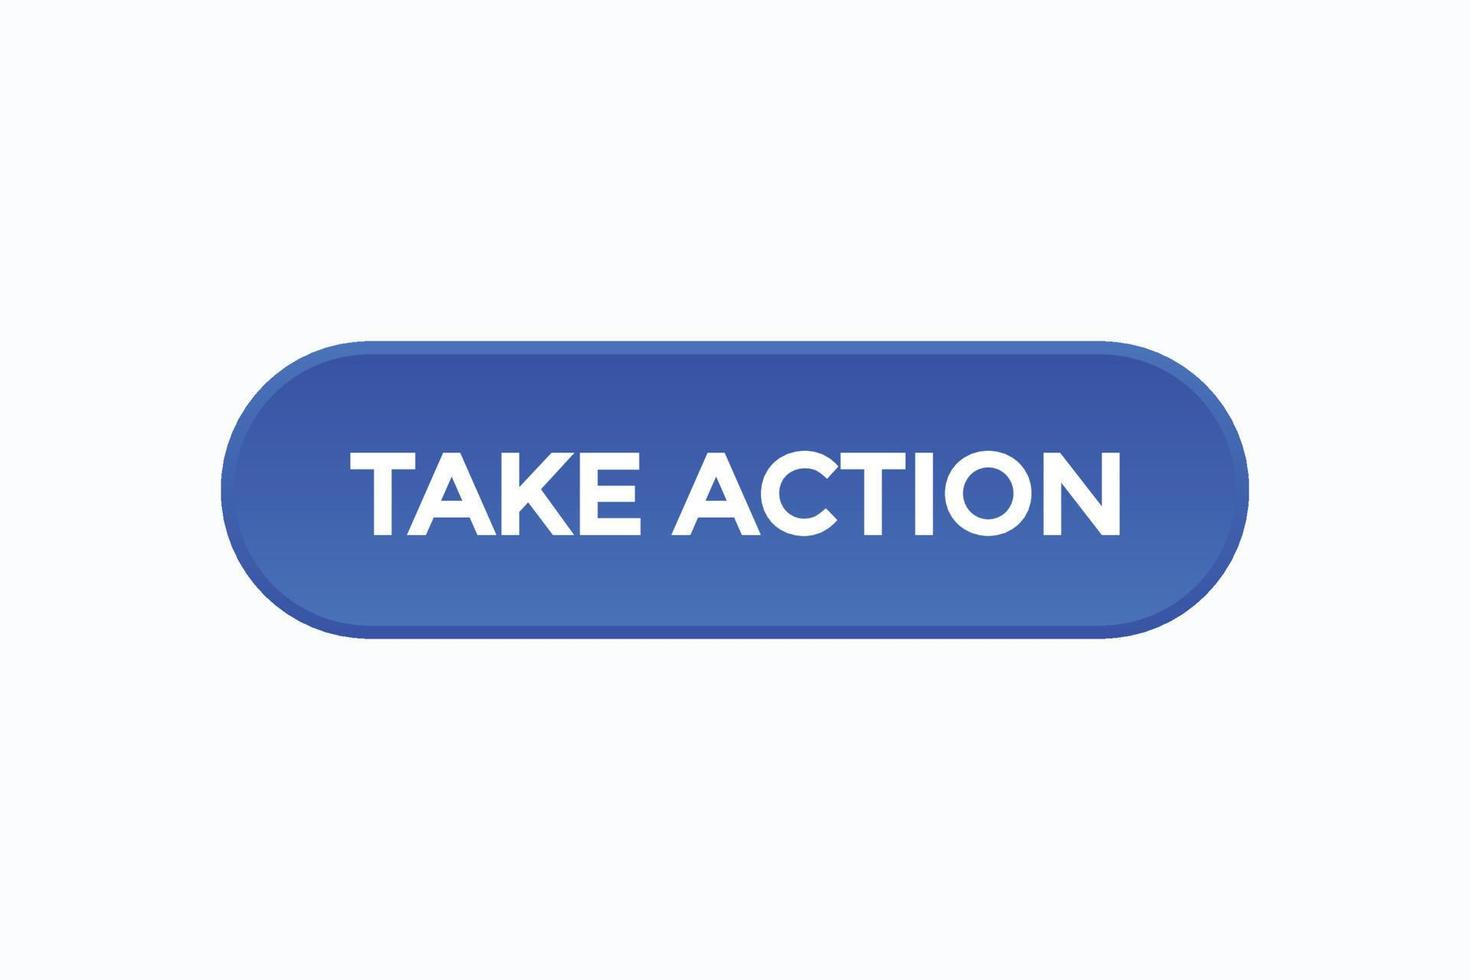 take action button vectors.sign label speech bubble take action vector